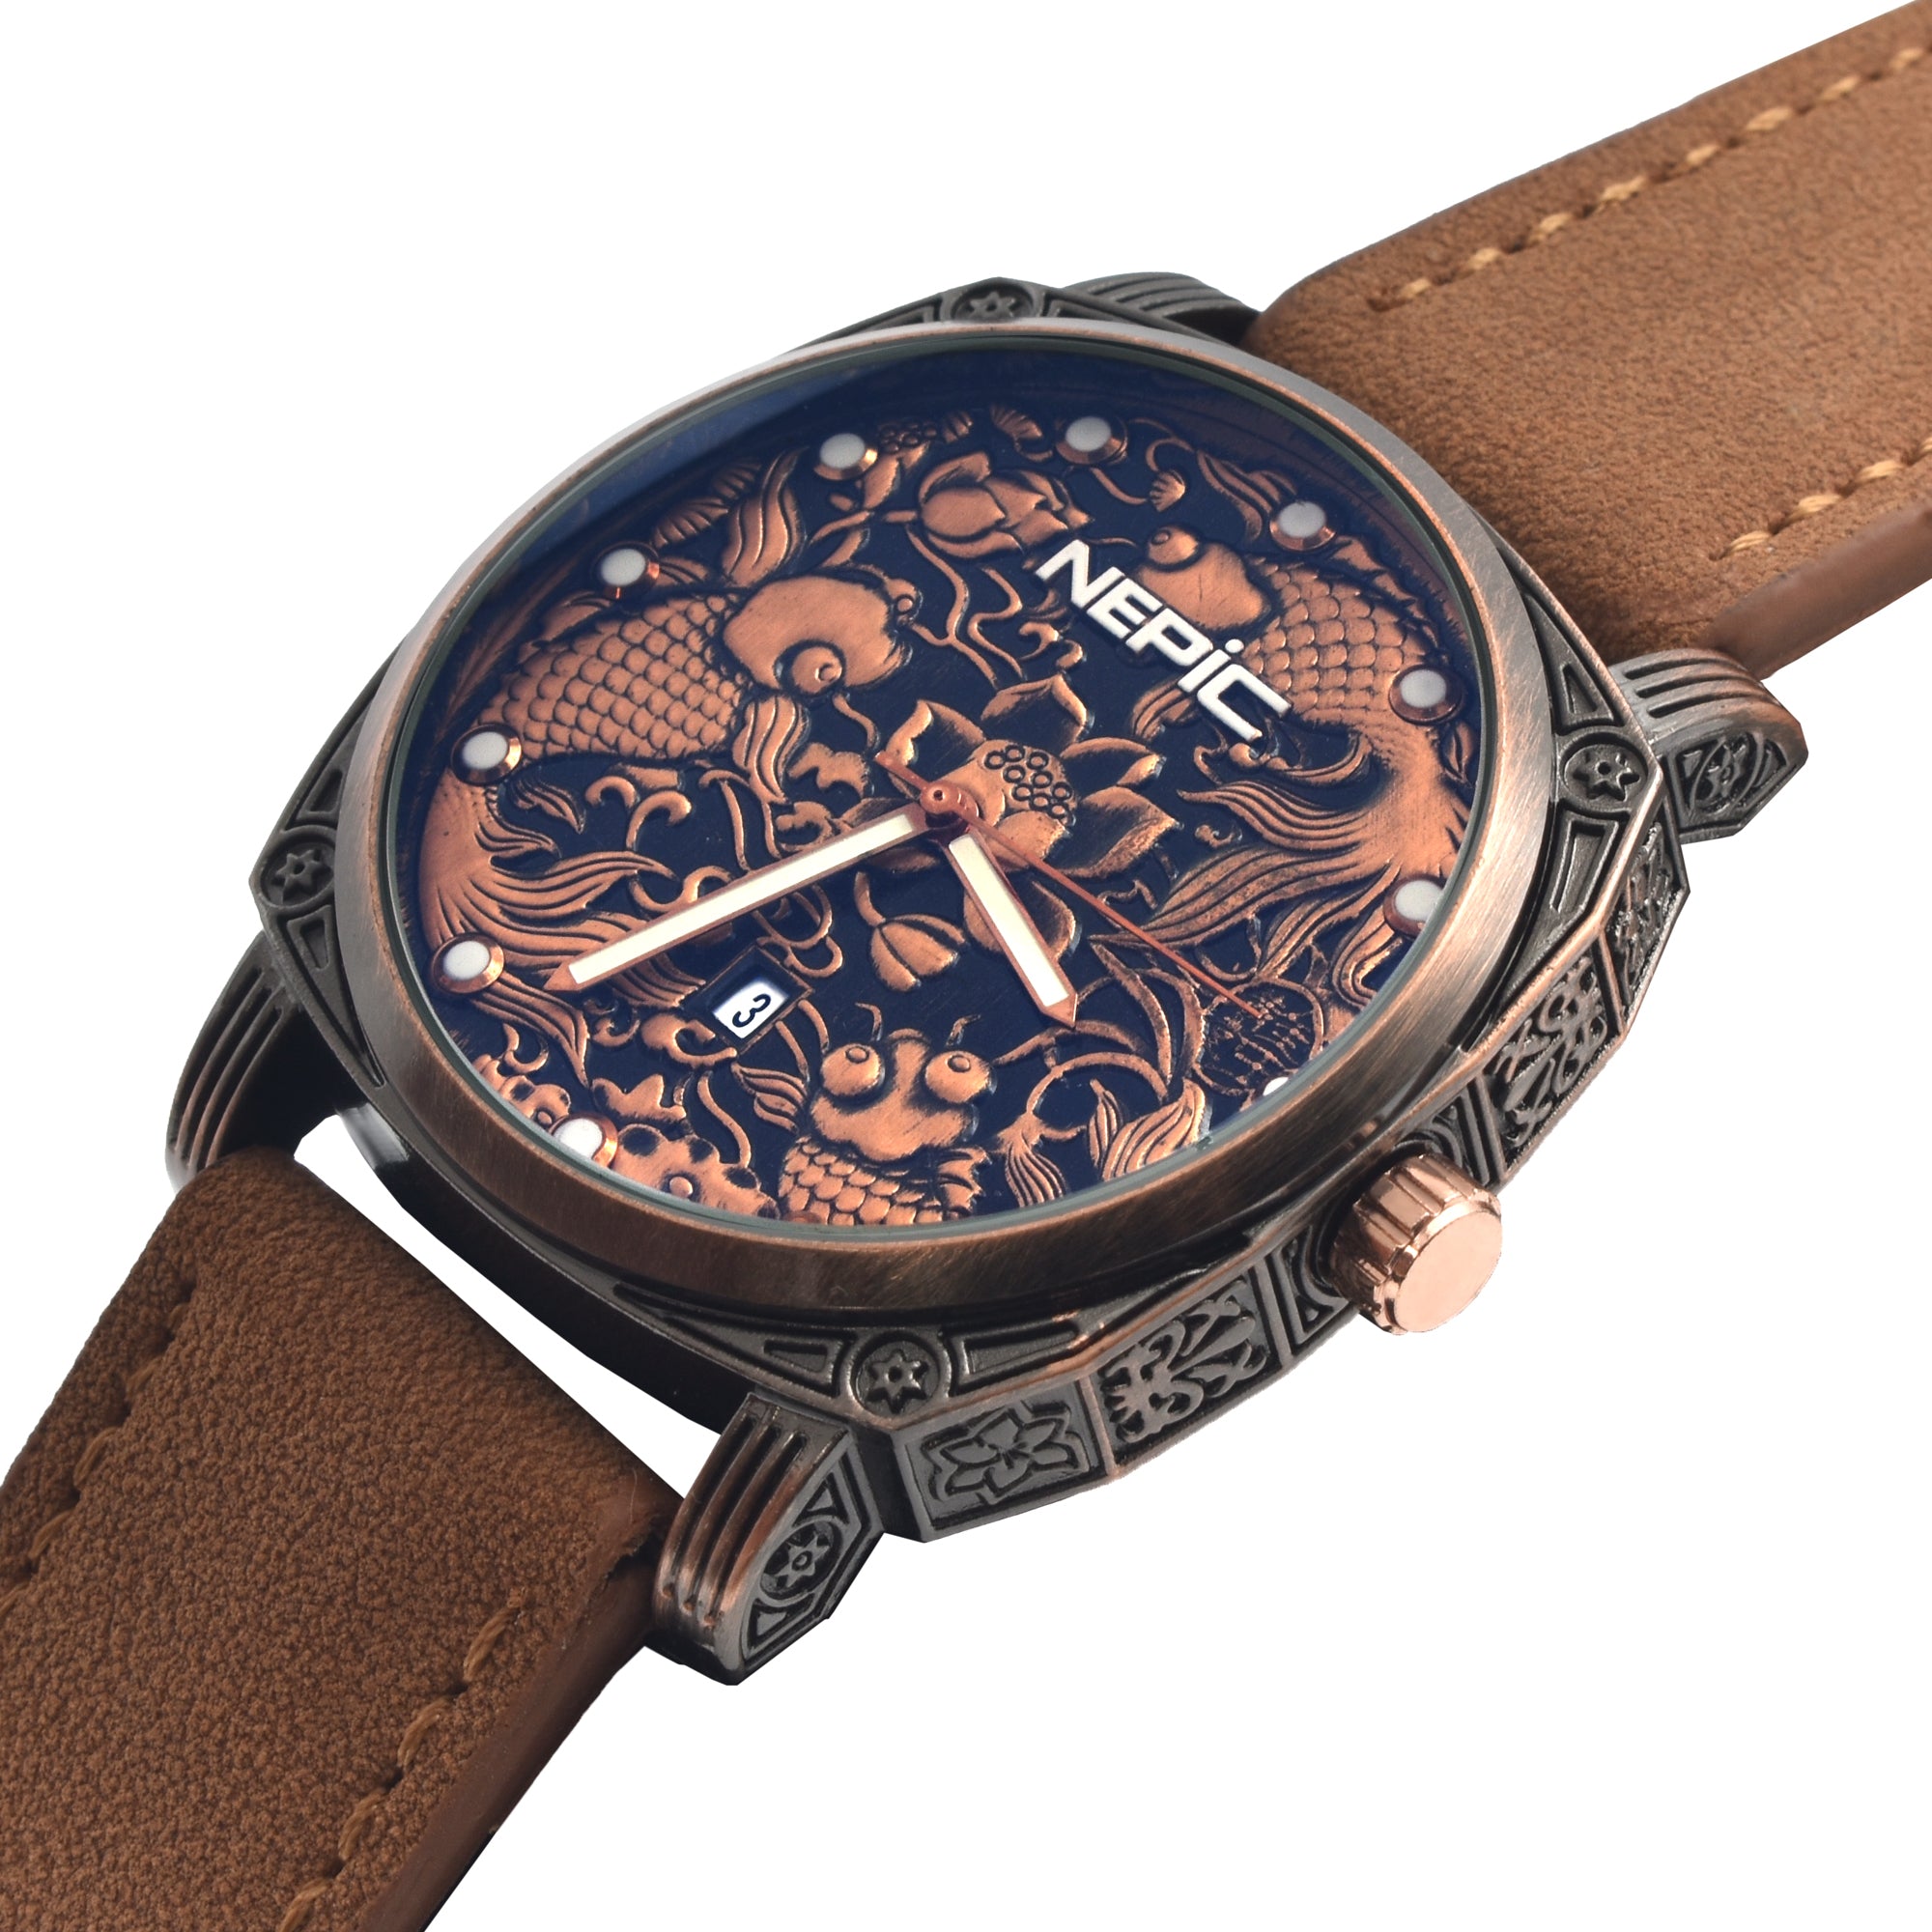 nepic m 6049 hand watch luxury| Alibaba.com